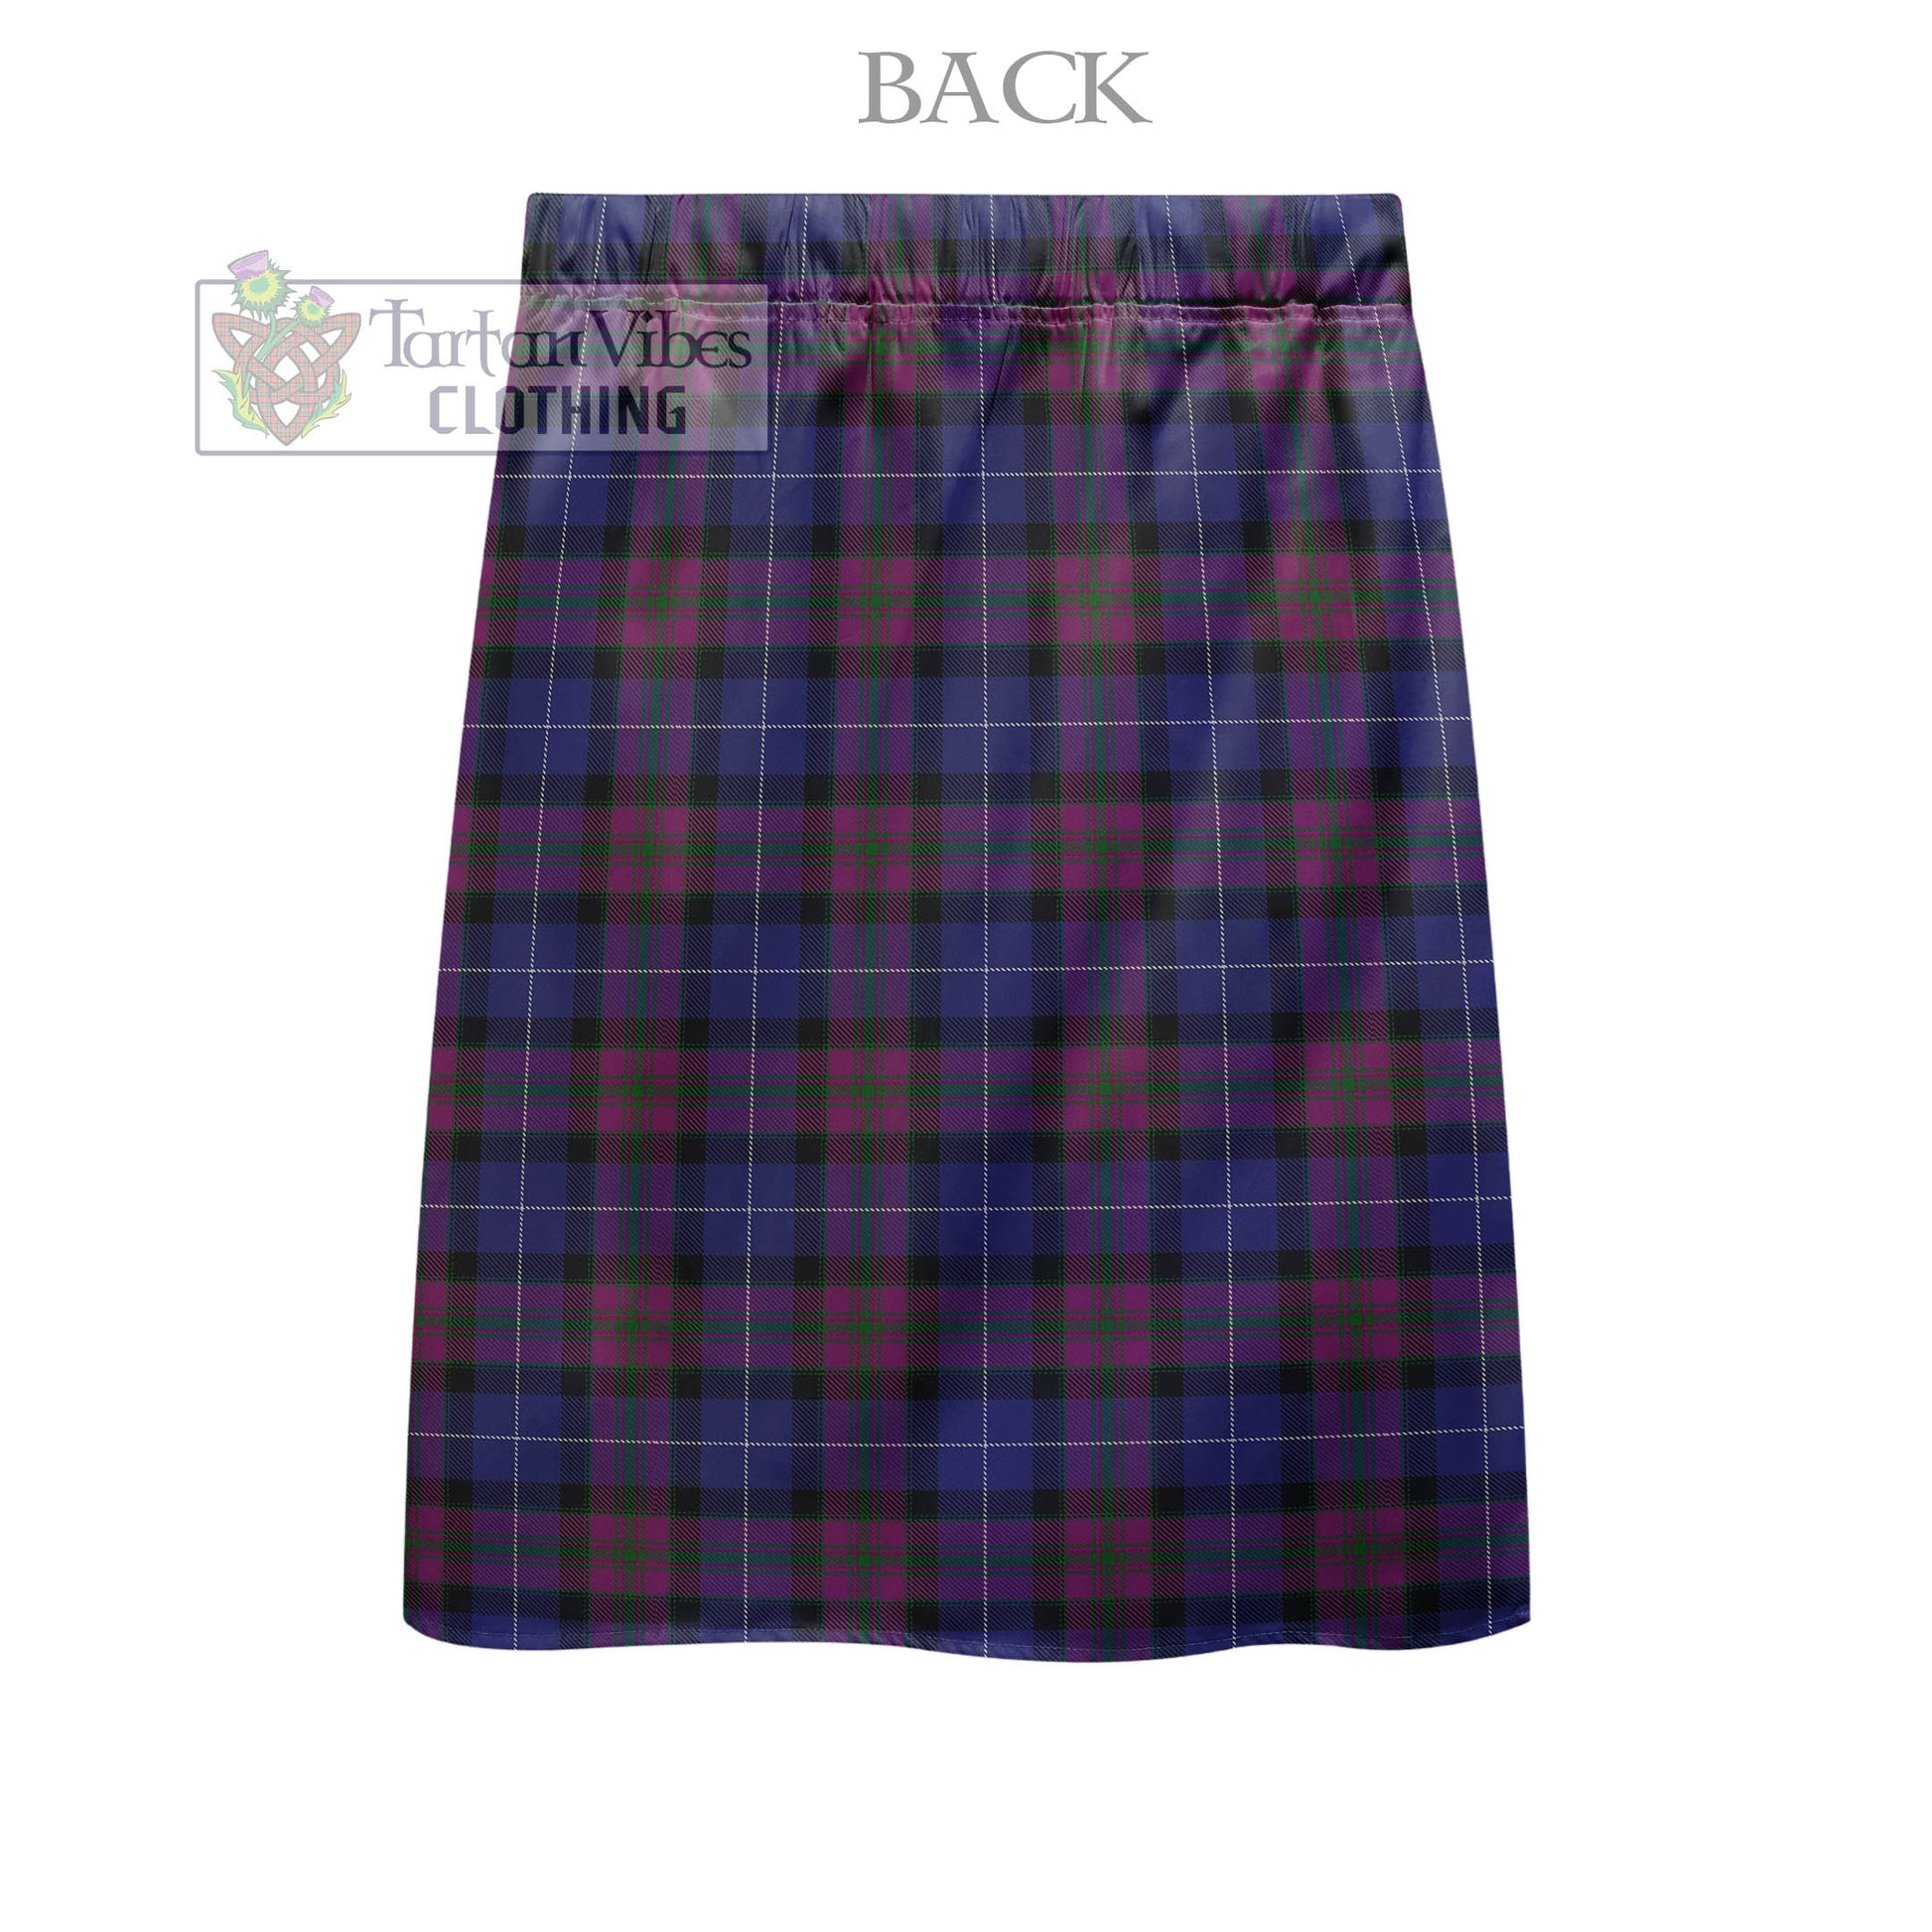 Tartan Vibes Clothing Pride of Scotland Tartan Men's Pleated Skirt - Fashion Casual Retro Scottish Style